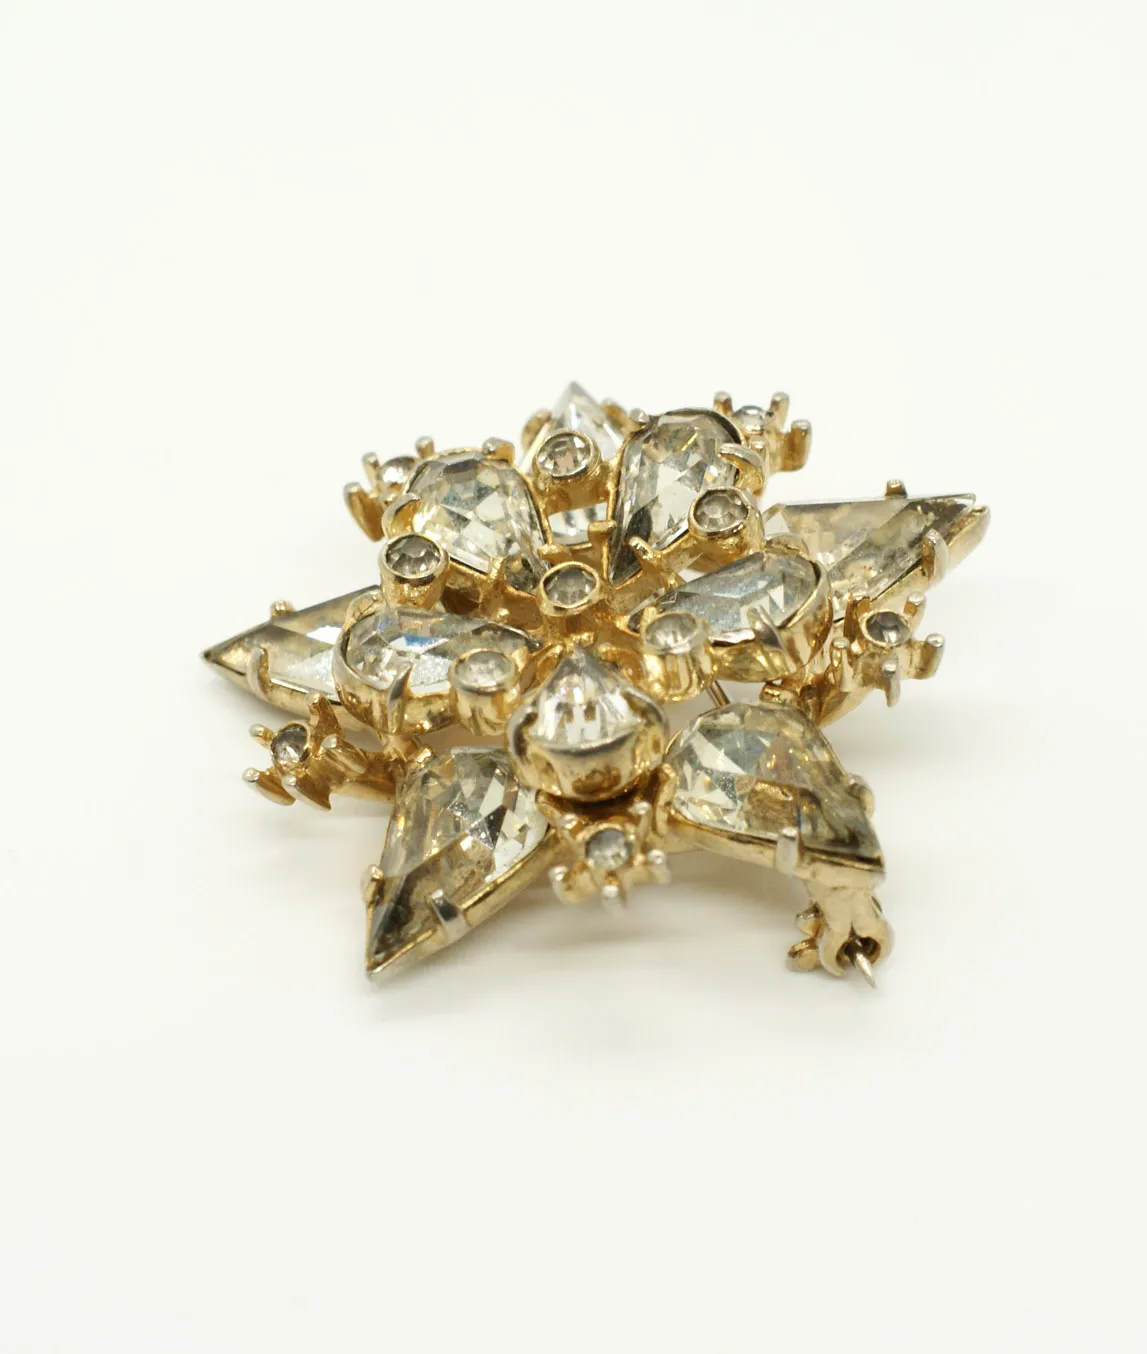 Eisenberg star brooch with flower detail